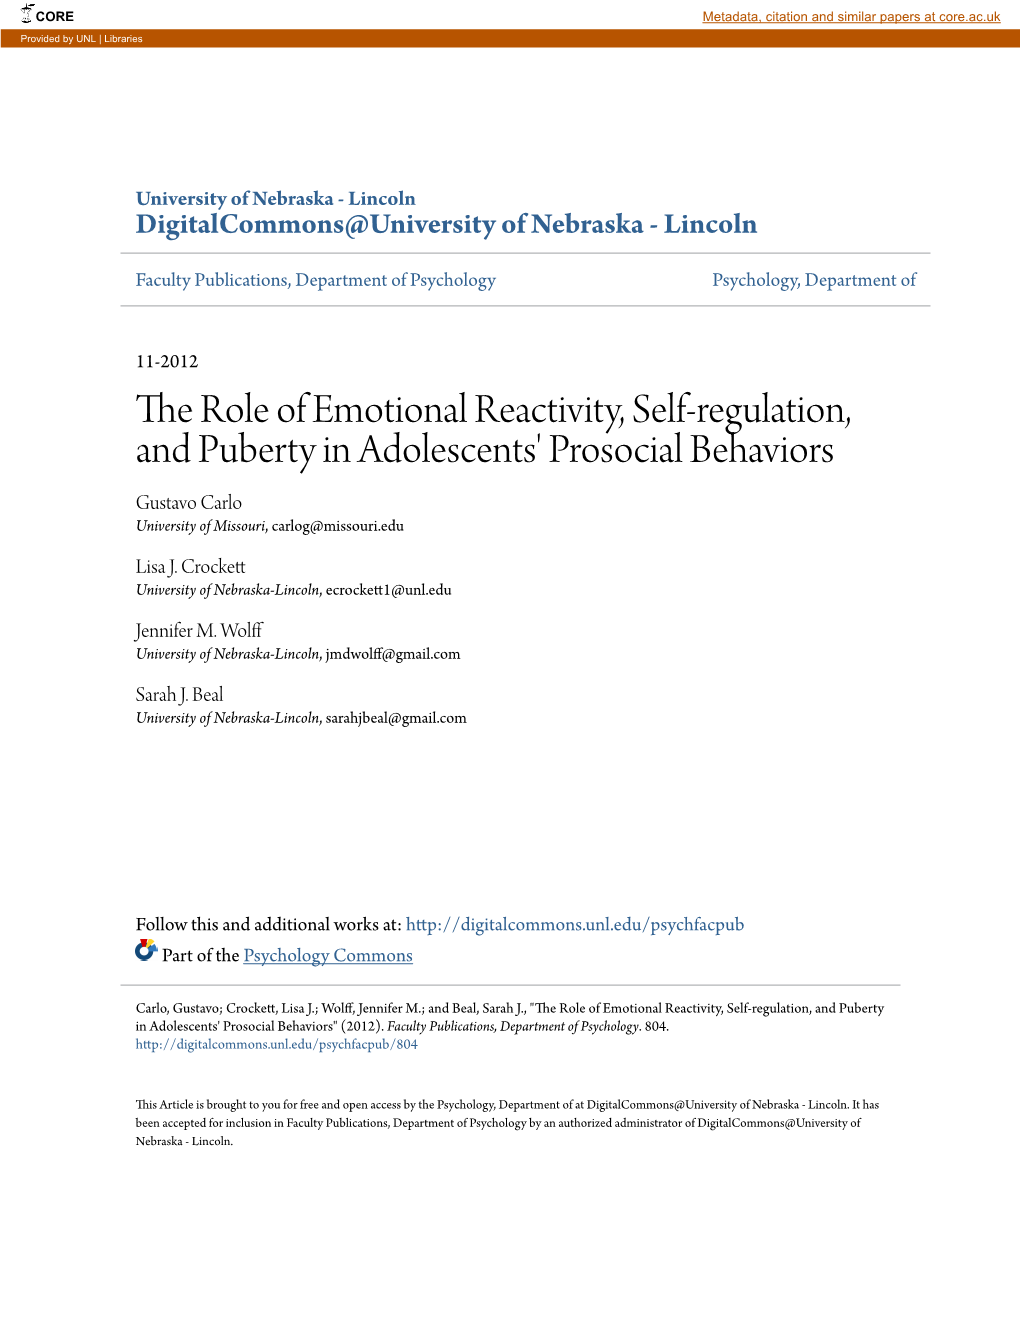 The Role of Emotional Reactivity, Self-Regulation, and Puberty in Adolescents' Prosocial Behaviors Gustavo Carlo University of Missouri, Carlog@Missouri.Edu